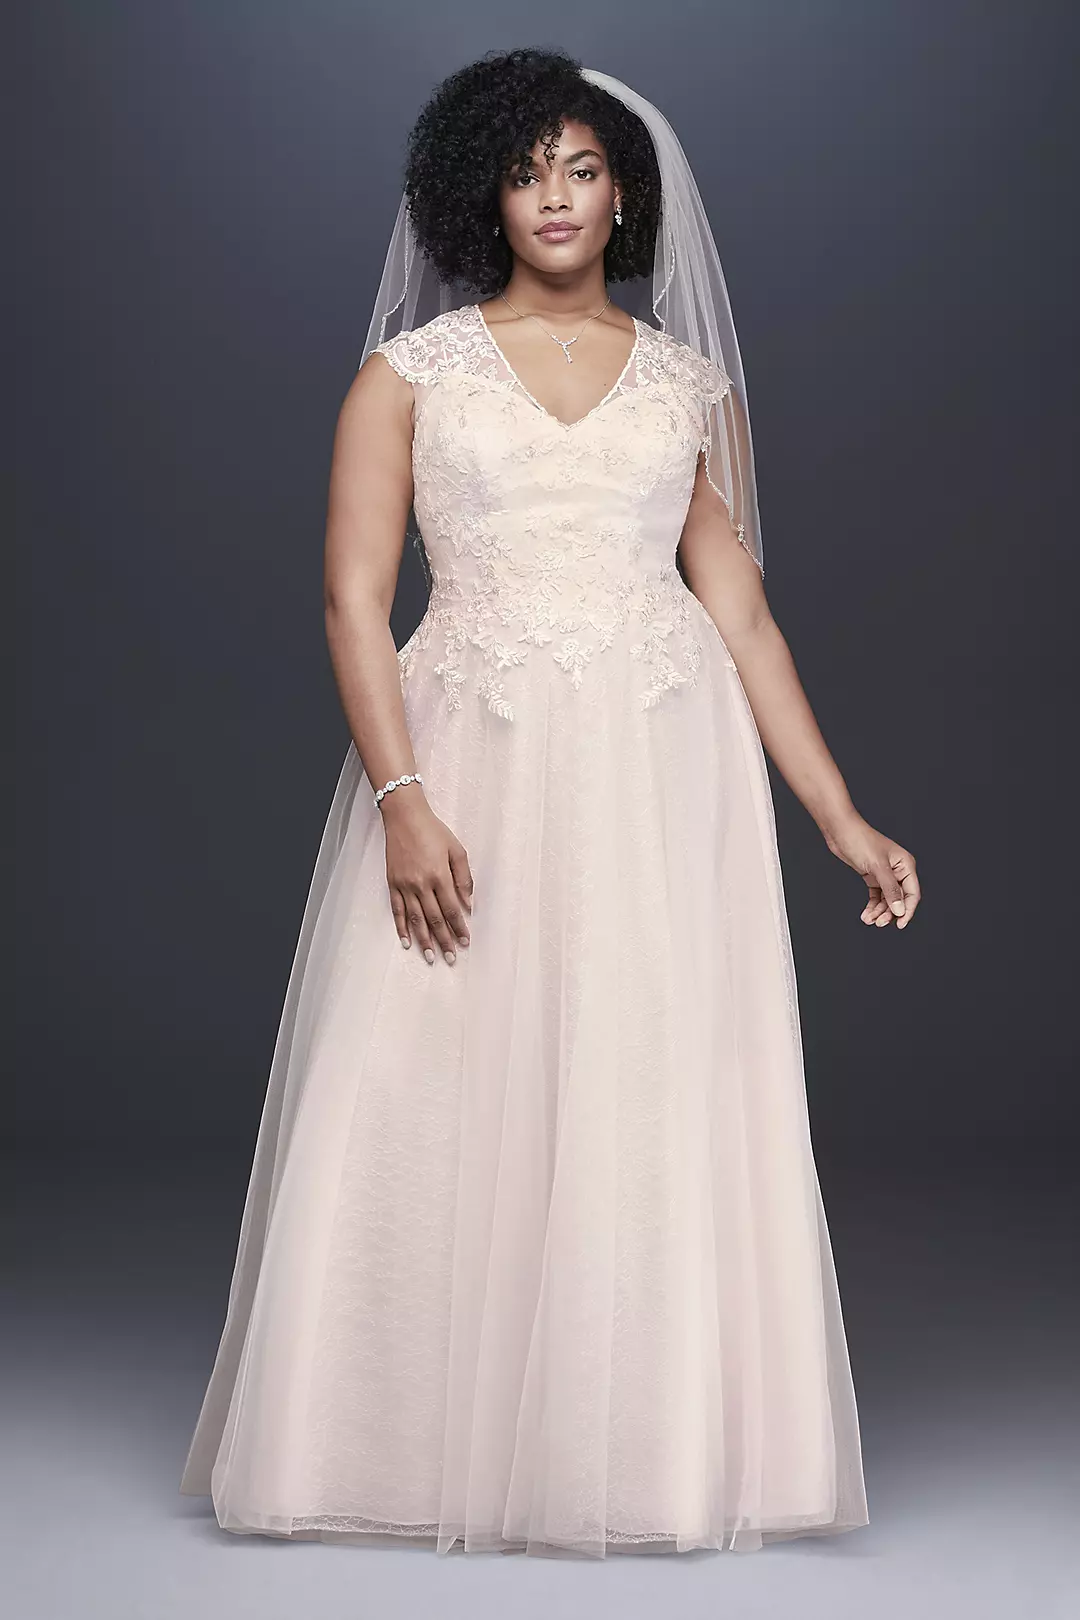 Tulle-Over-Lace V-Neck A-Line Wedding Dress Image